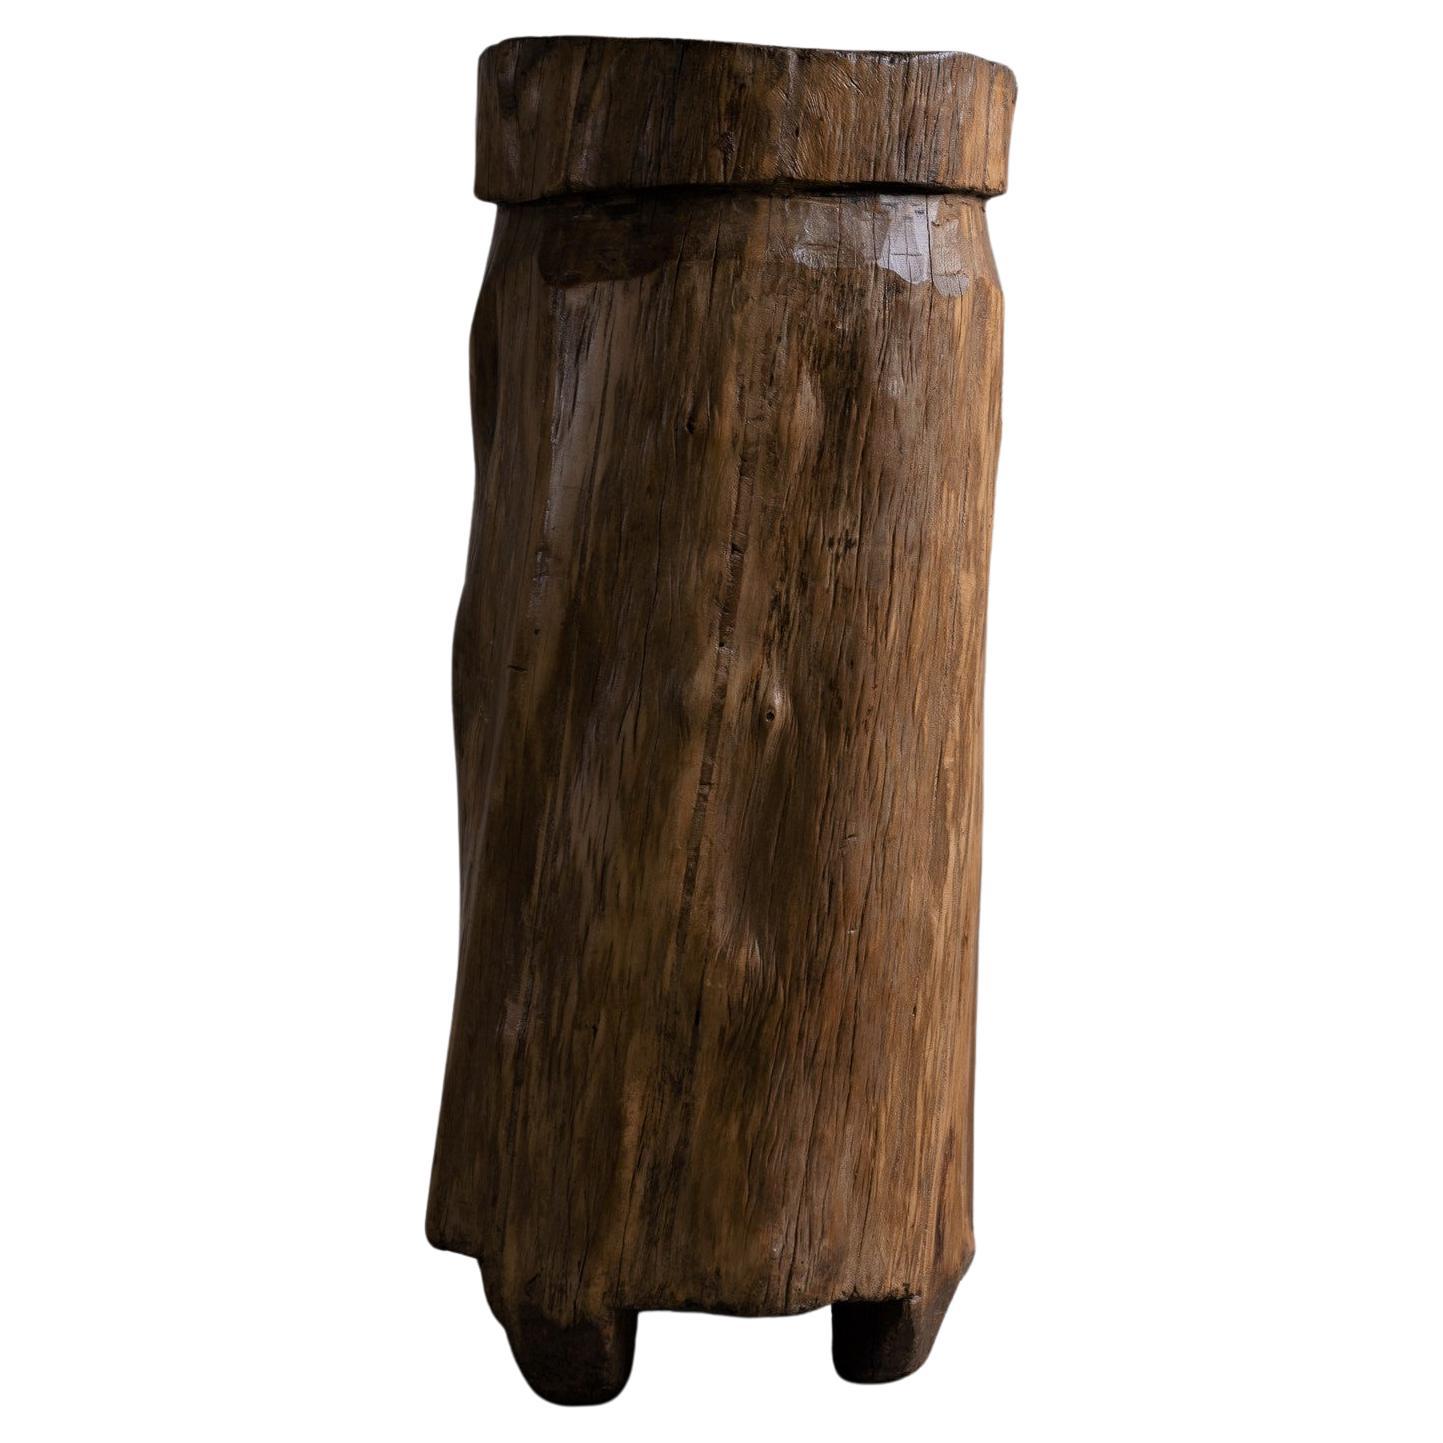 Primitive Organic Wooden Naga Pot in Teak, Wabi Sabi Style, 20th Century